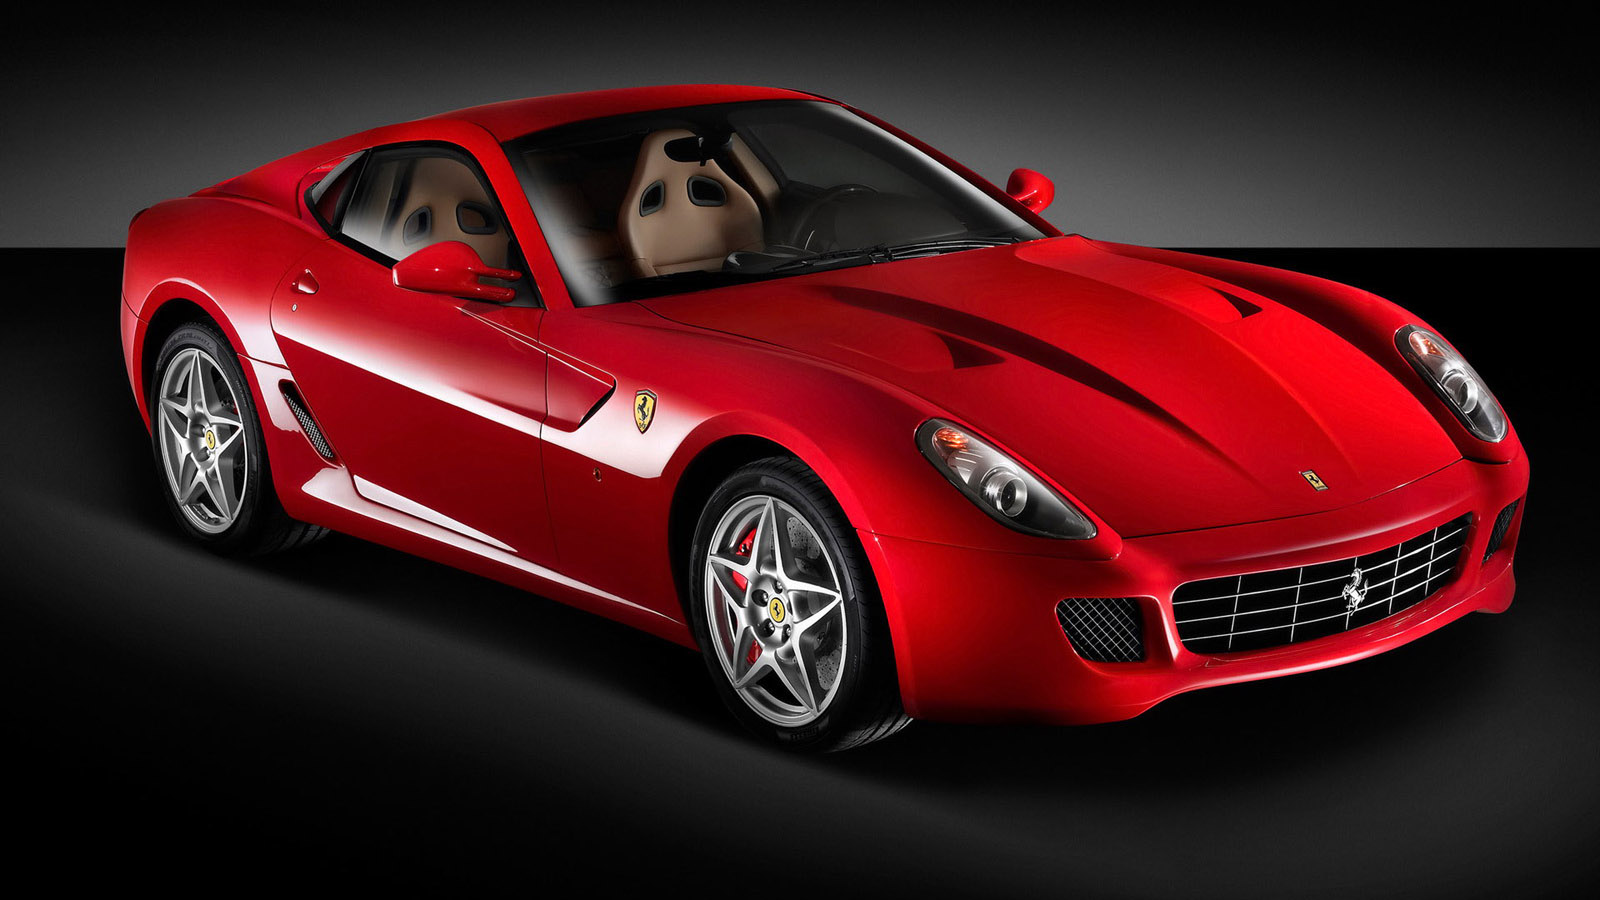 Ferrari sports car desktop background picture